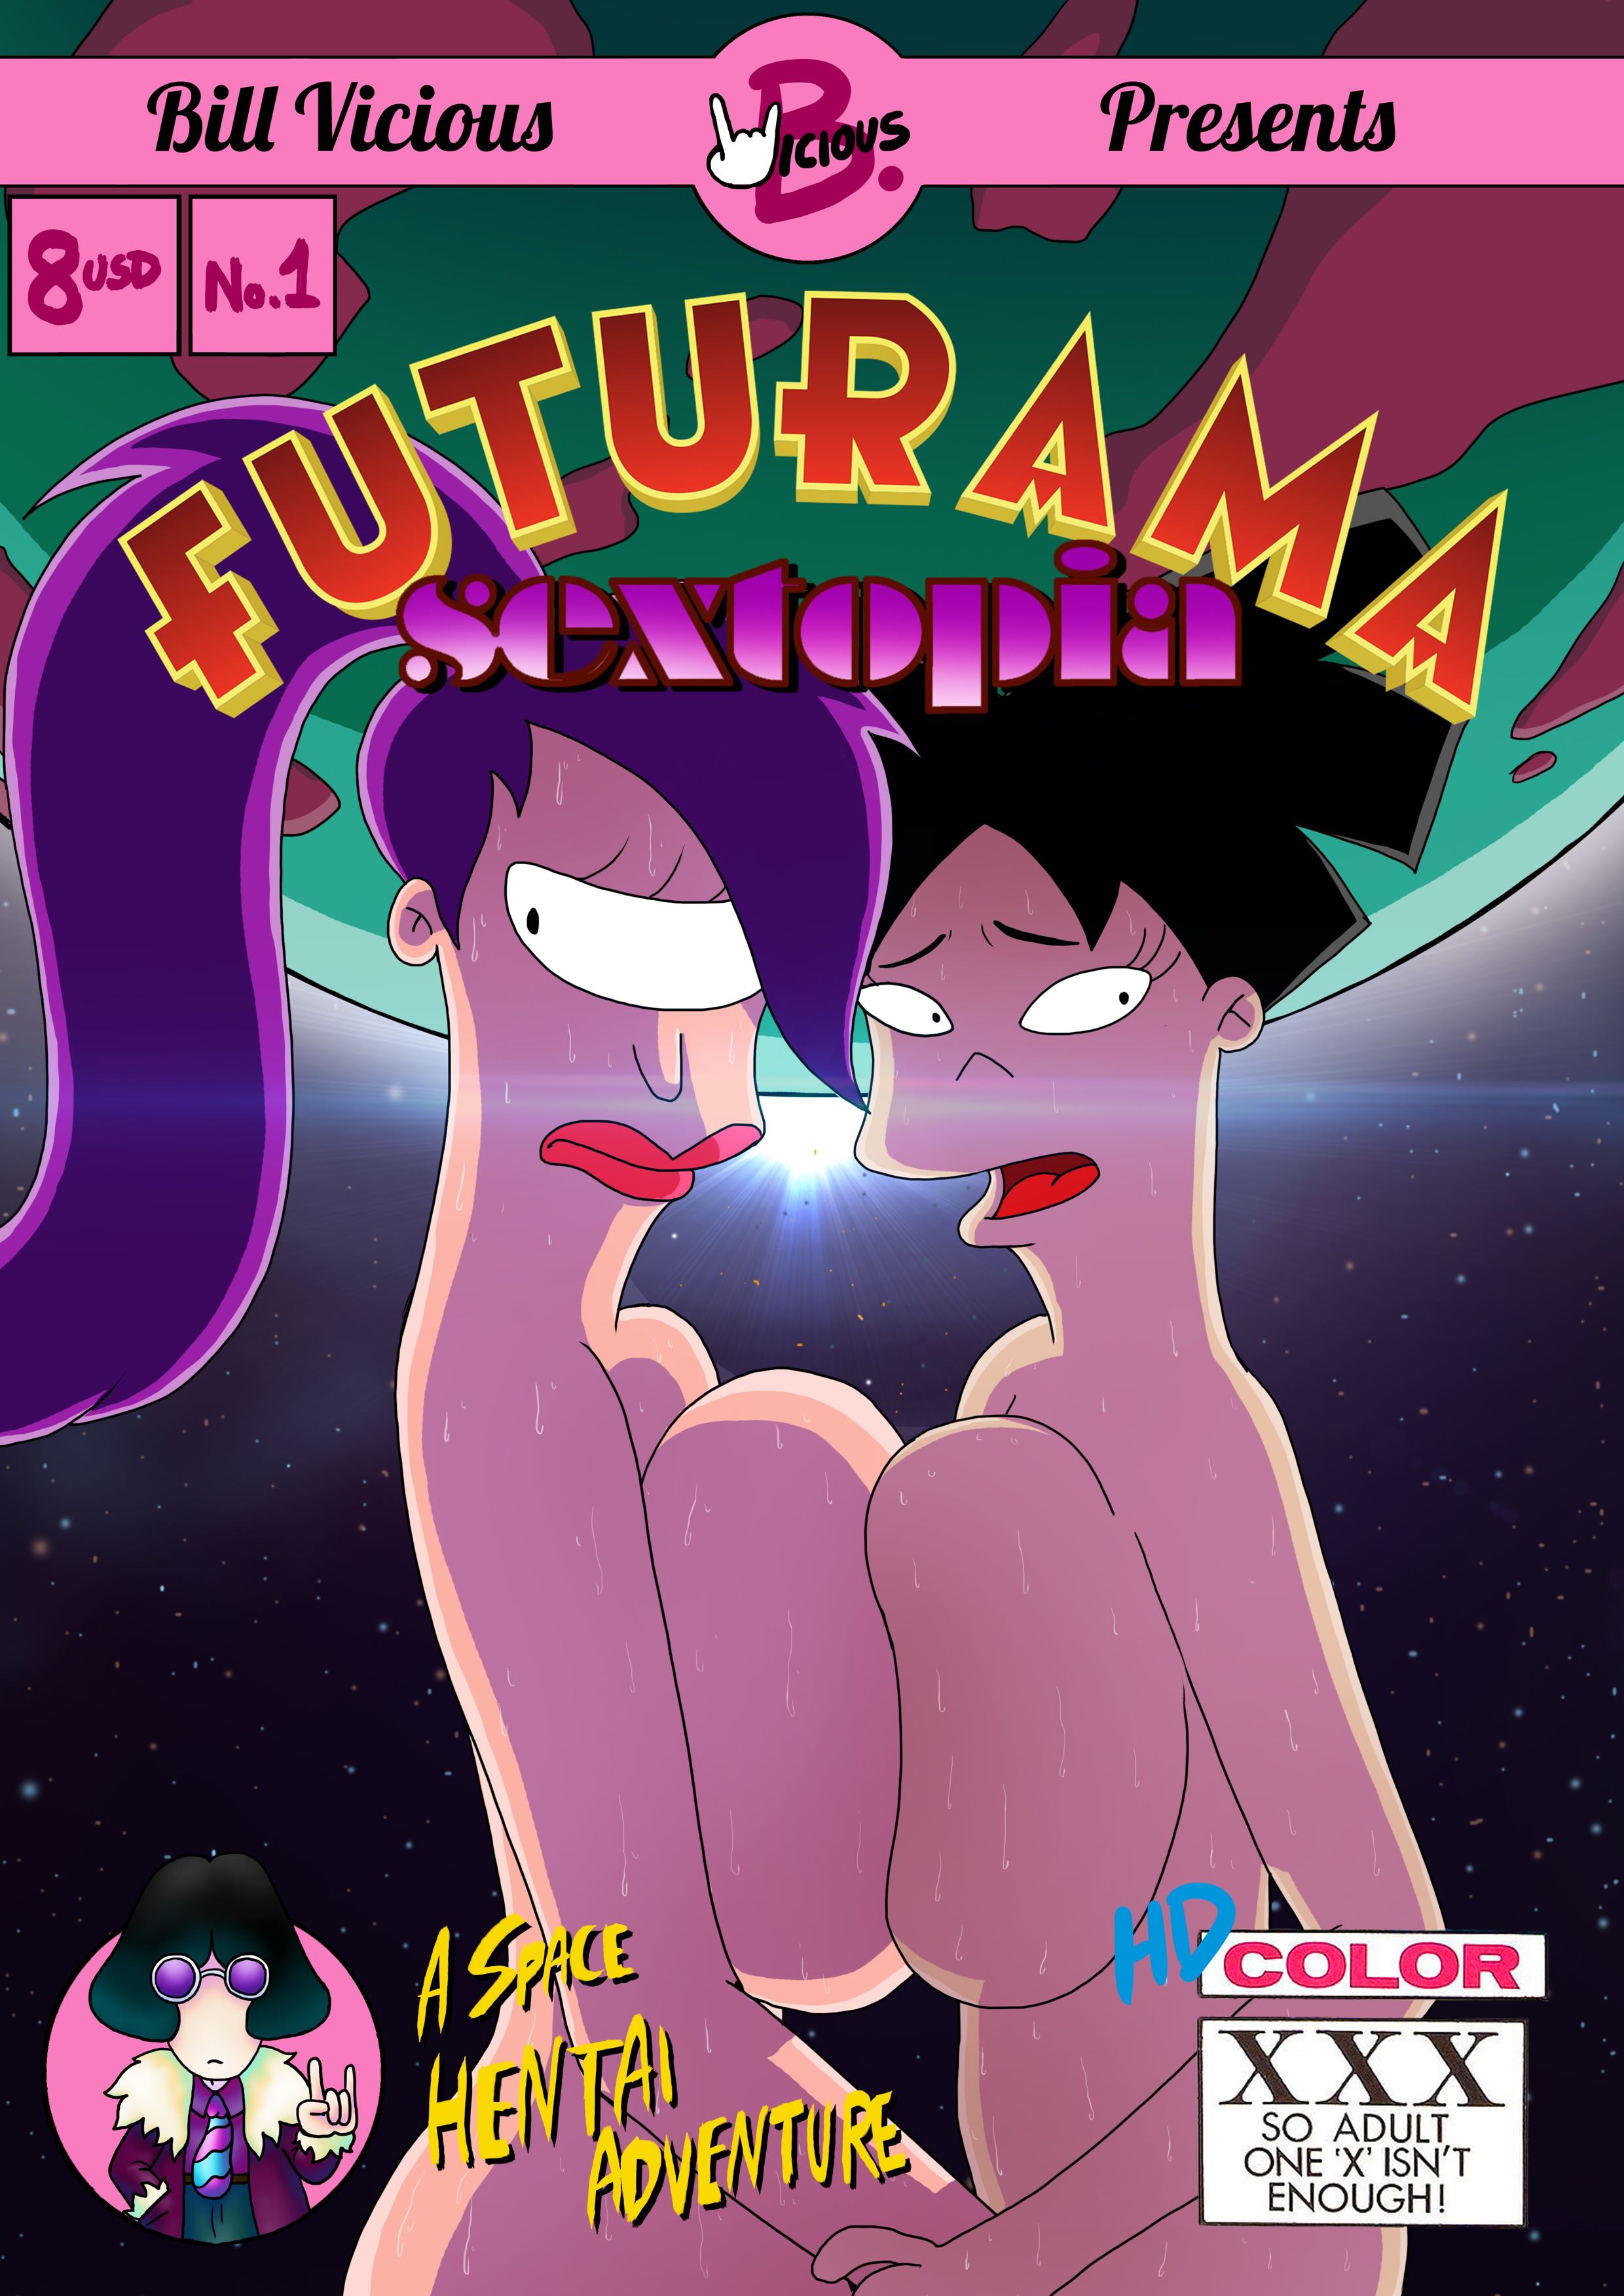 Bill Vicious - Futurama Sextopia